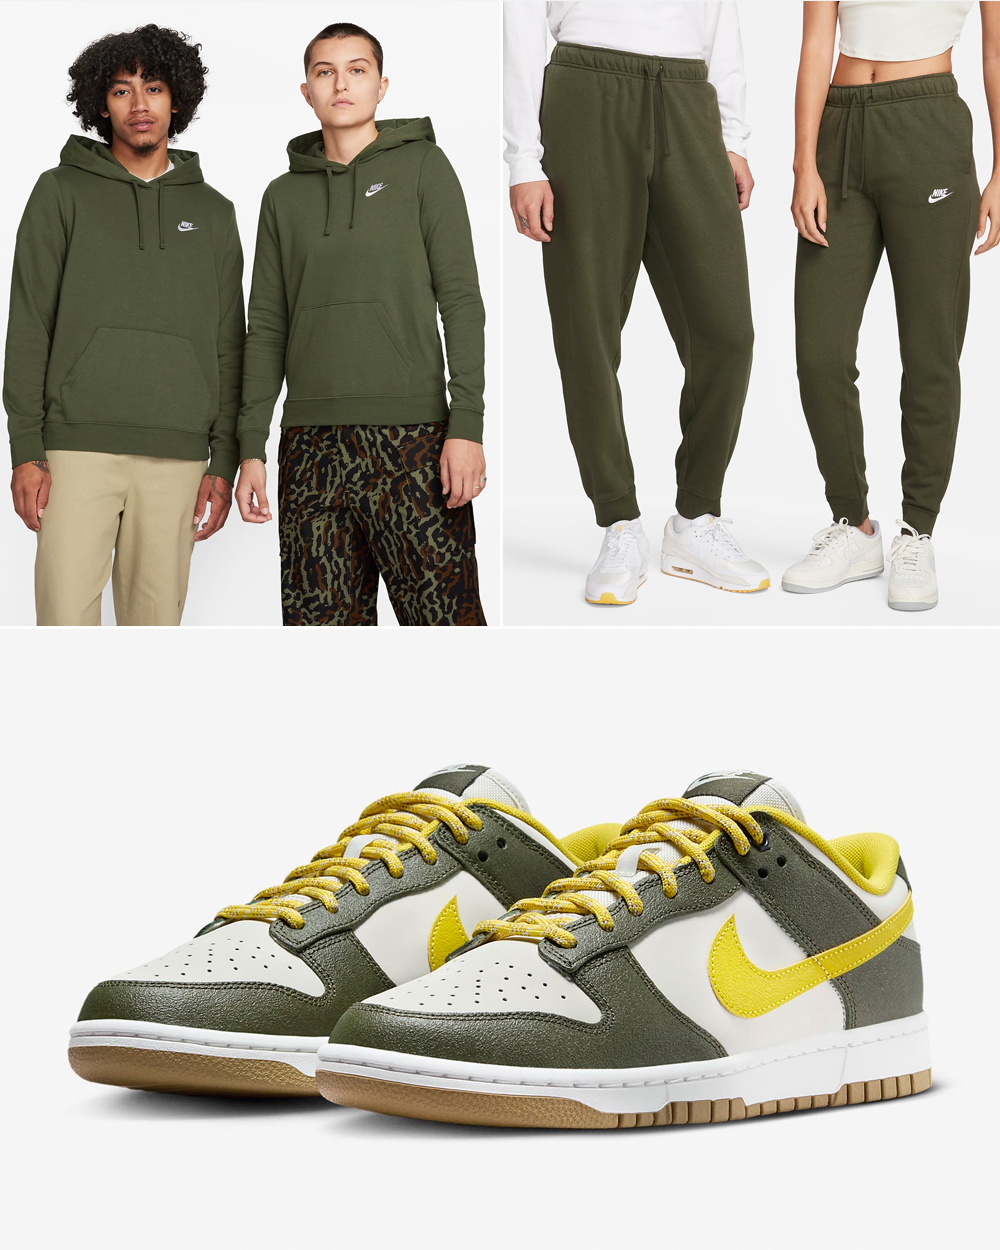 Nike-Dunk-Low-Cargo-Khaki-Vivid-Sulfur-Clothing